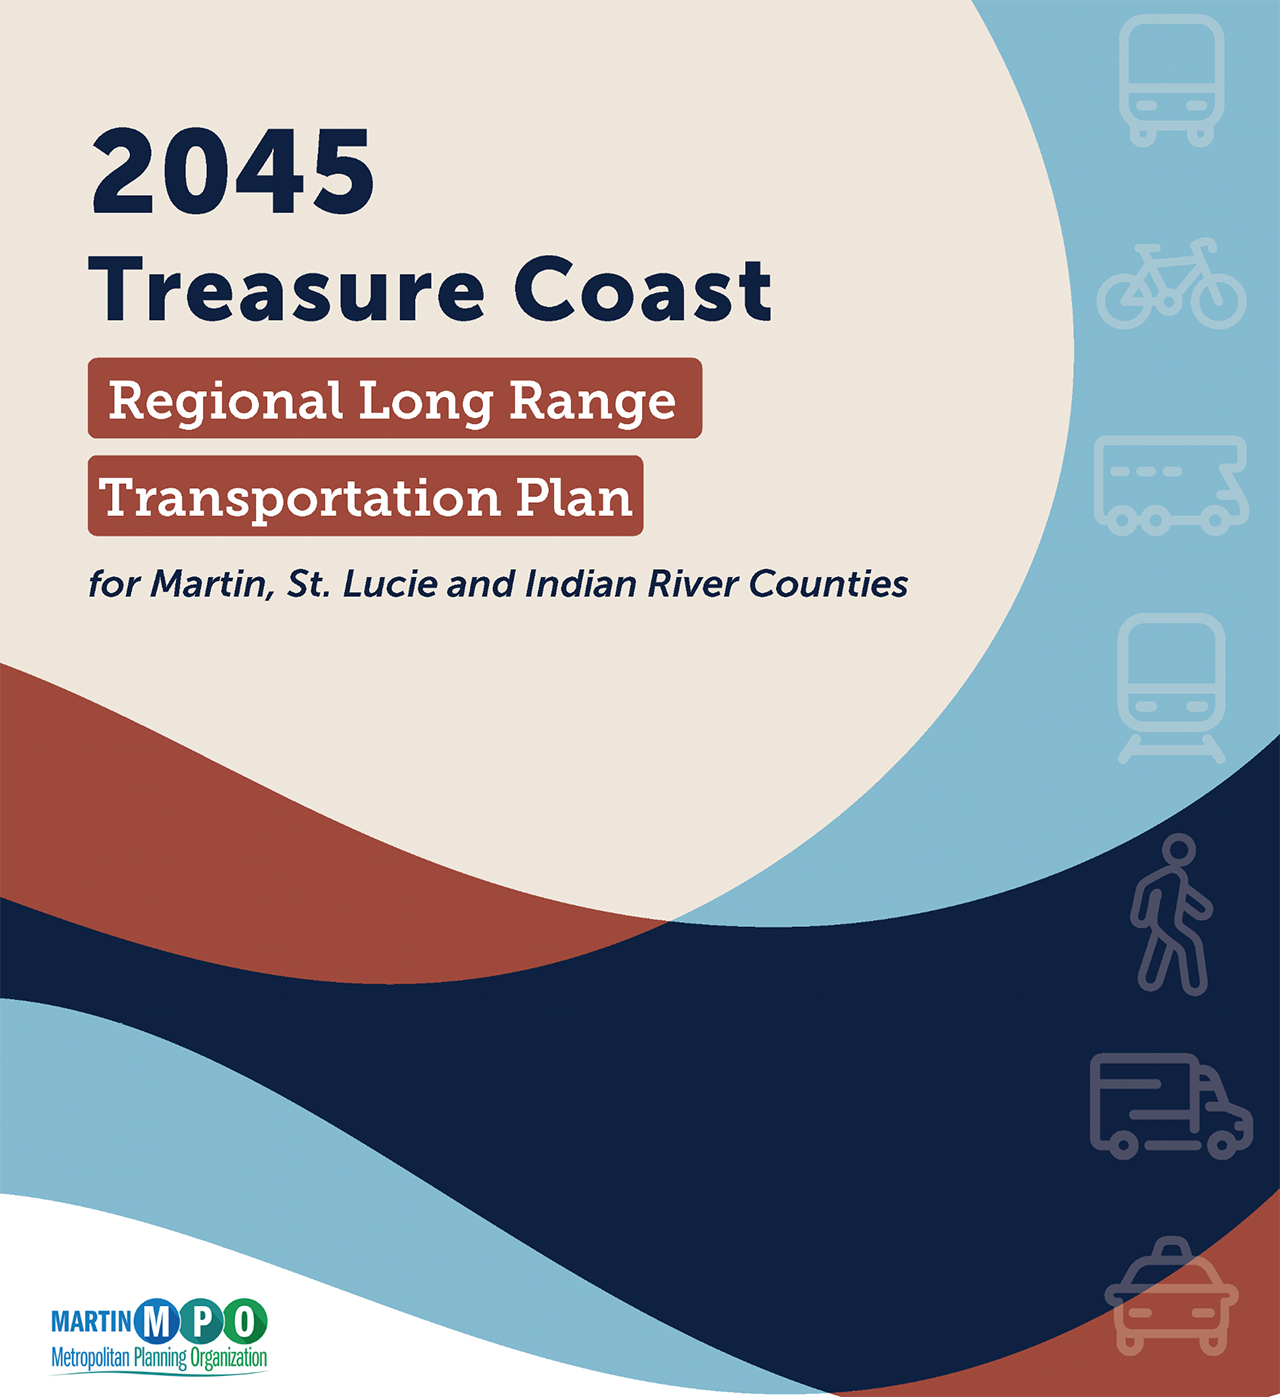 Treasure Coast RLRTP 2045